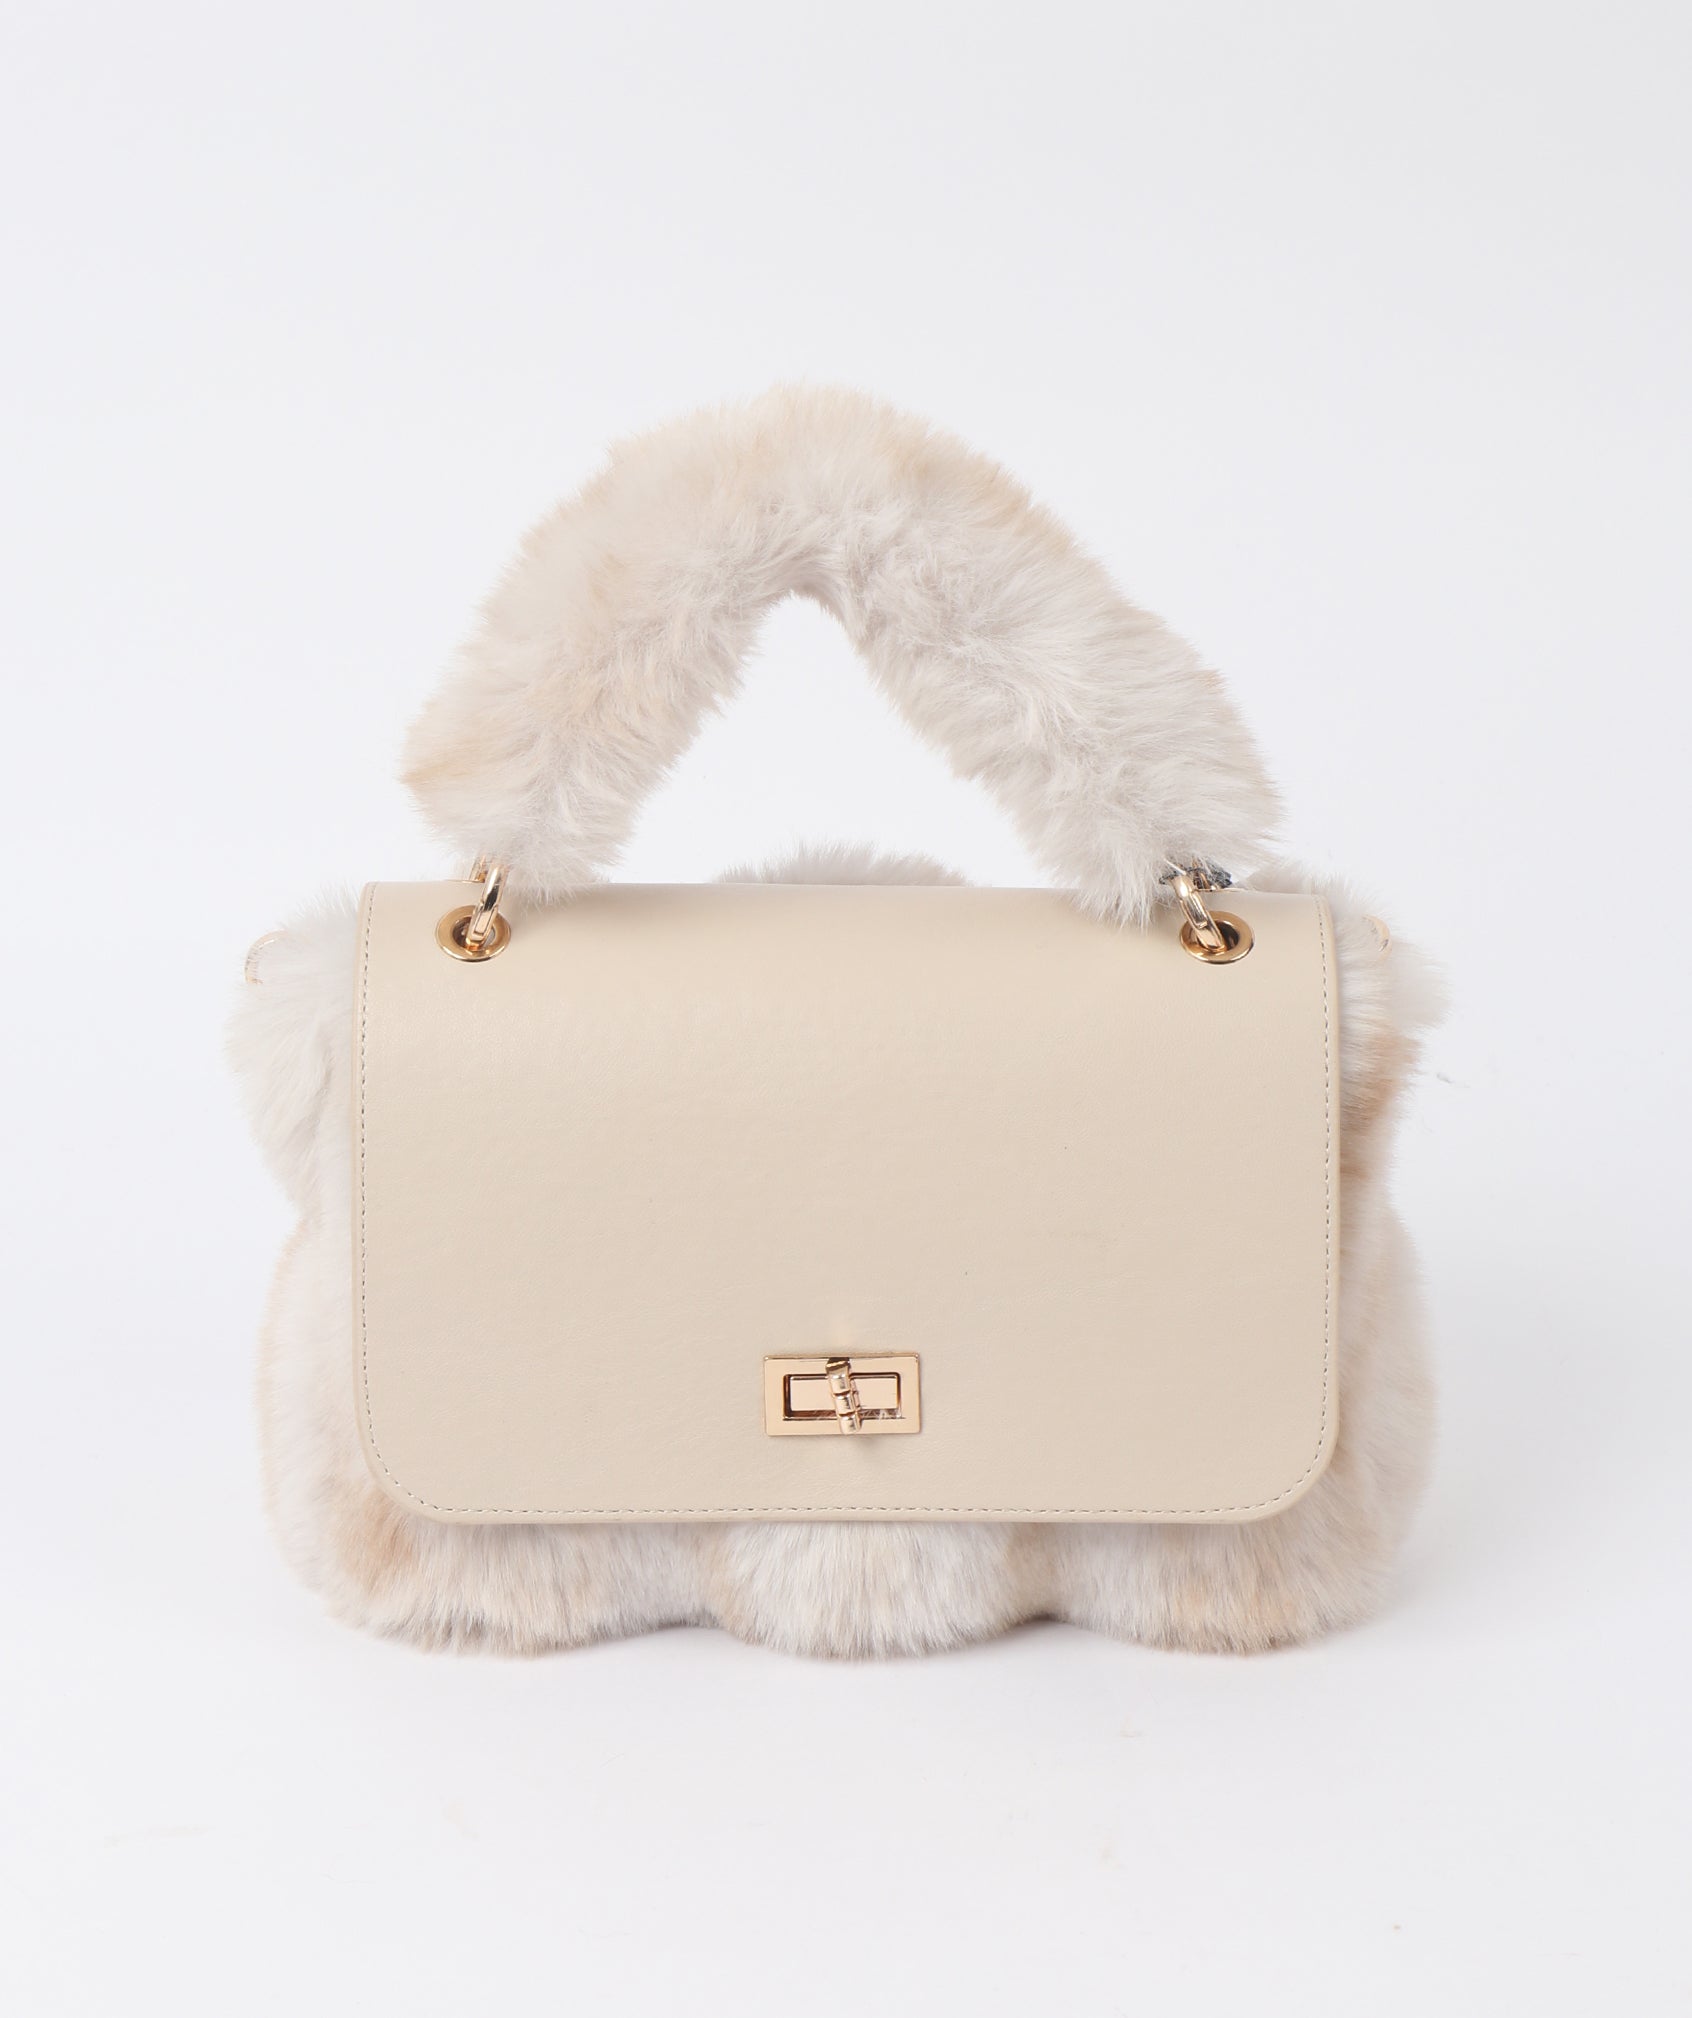 Braccialini designer beige fur bag purse, rabbit shape with plush keychain  charm | eBay